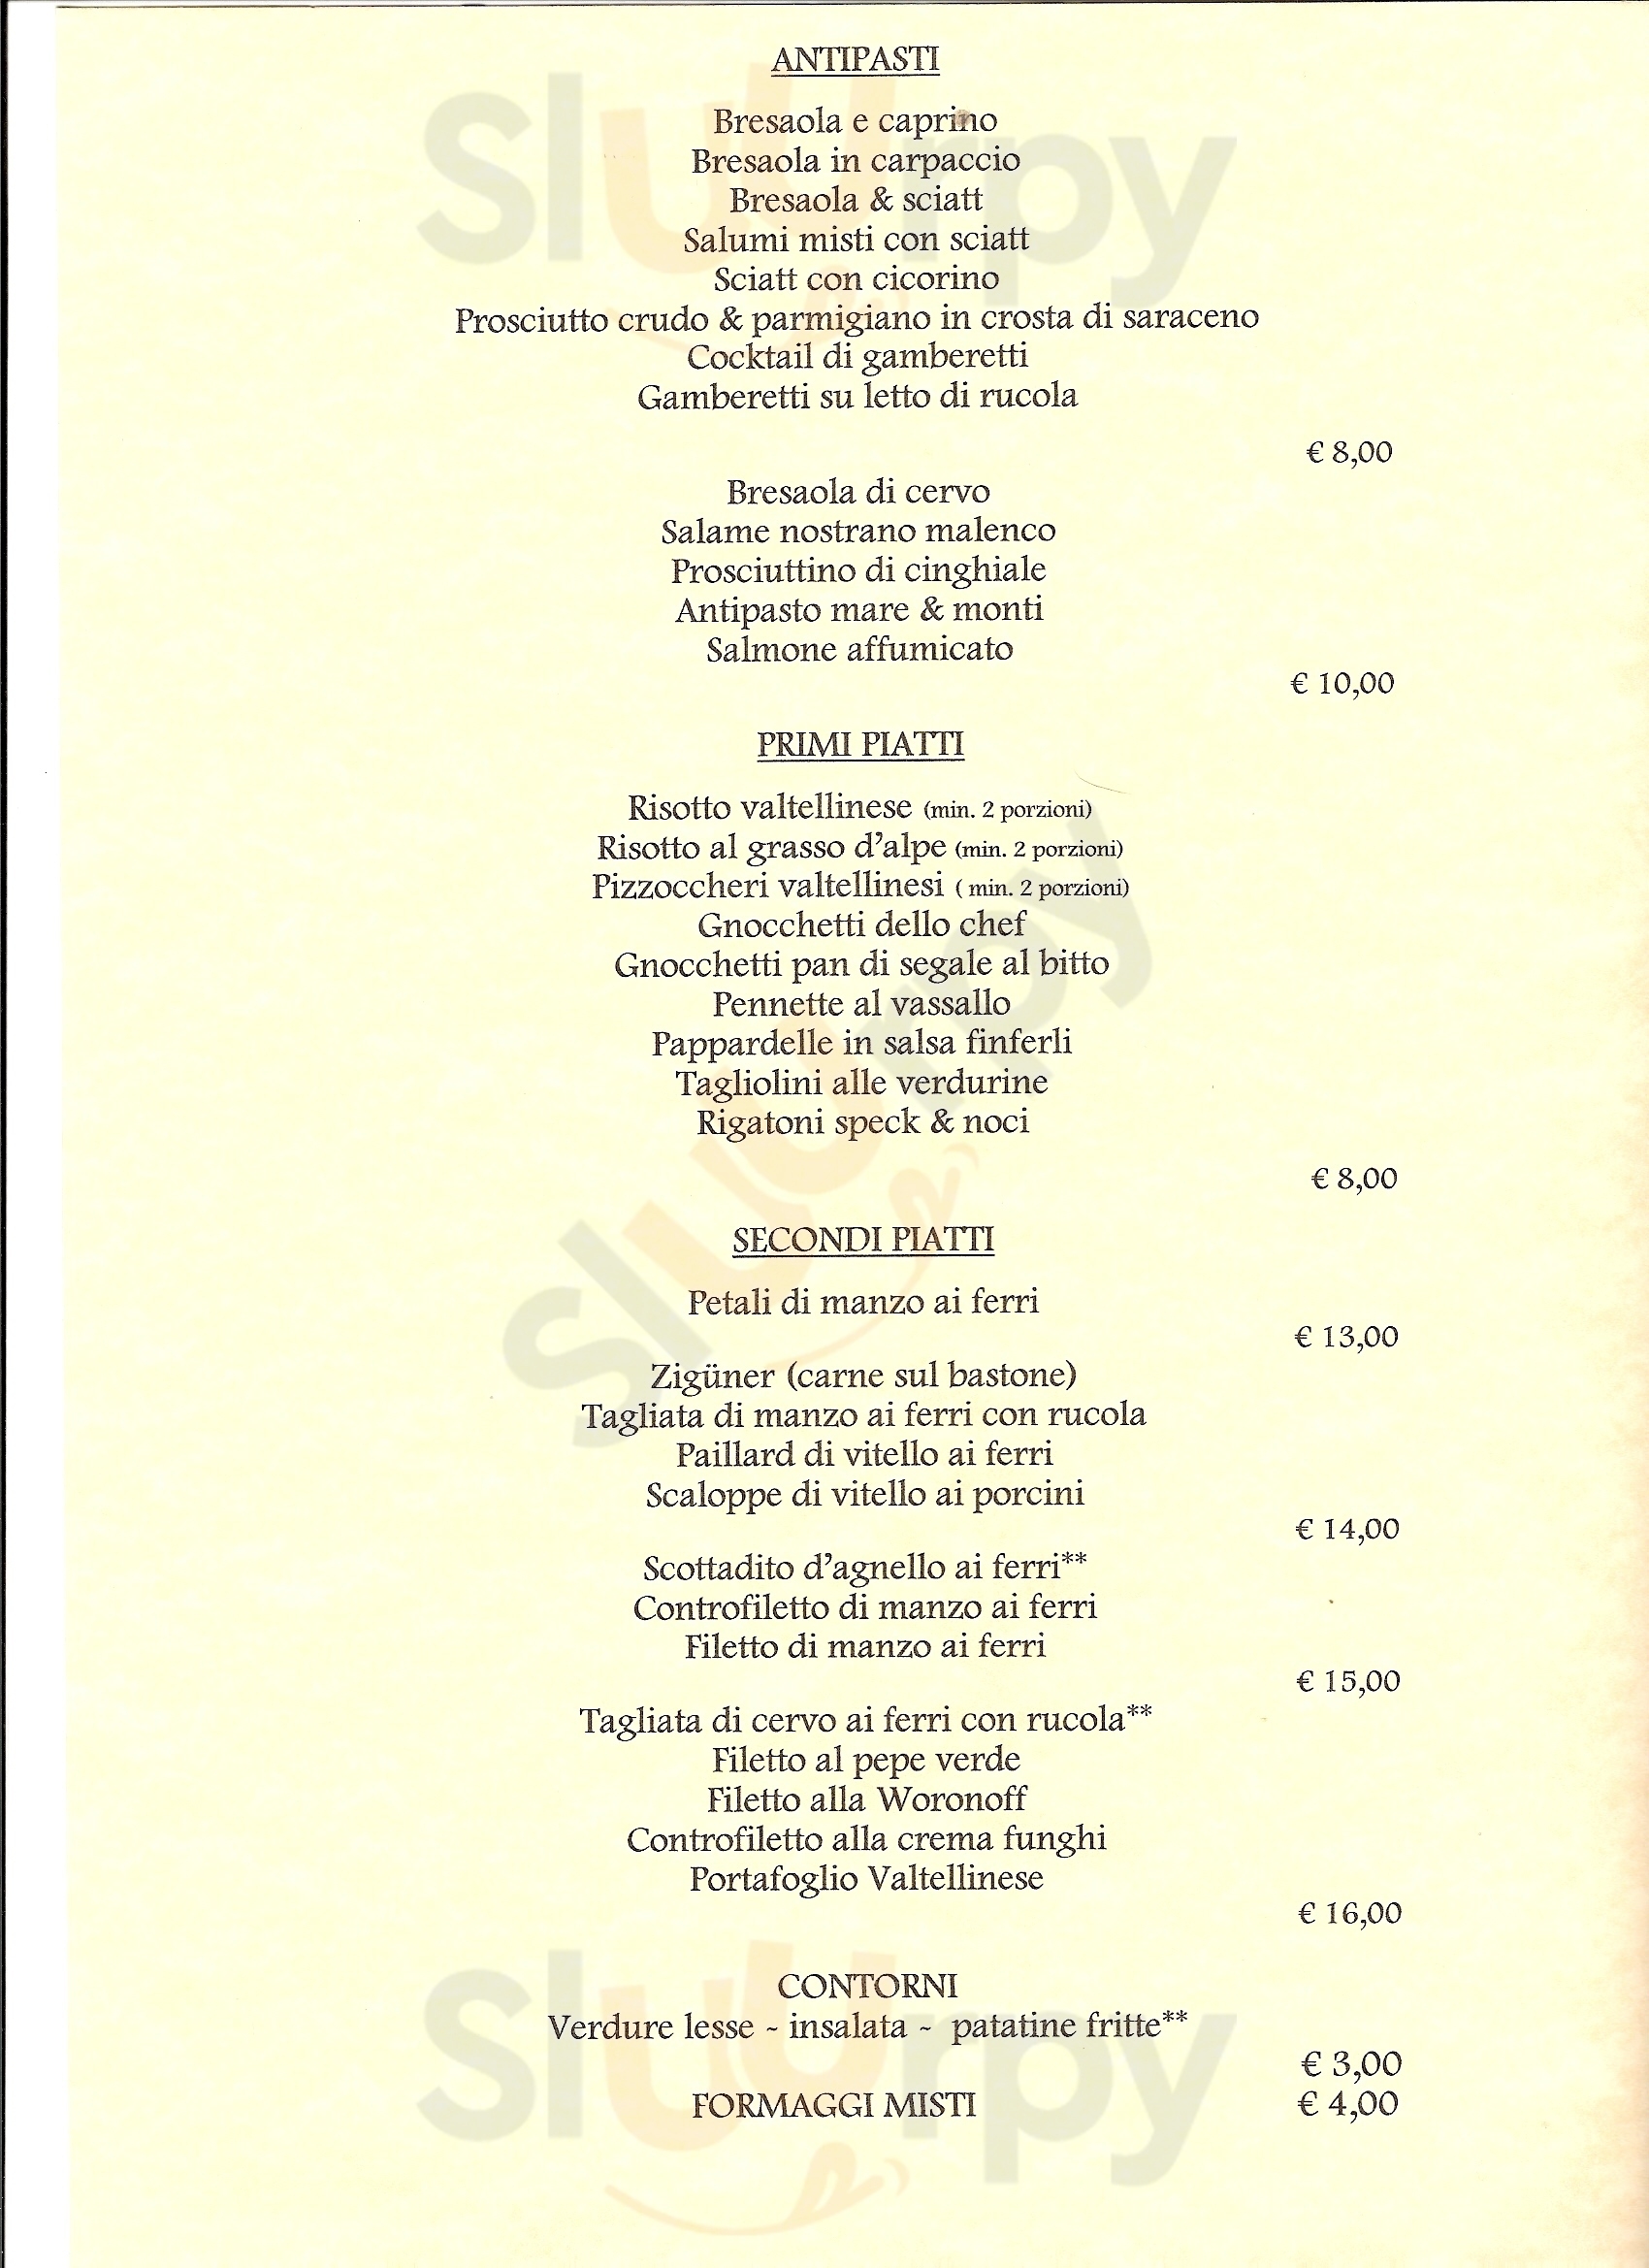 Restaurant Il Vassallo Chiesa in Valmalenco menù 1 pagina